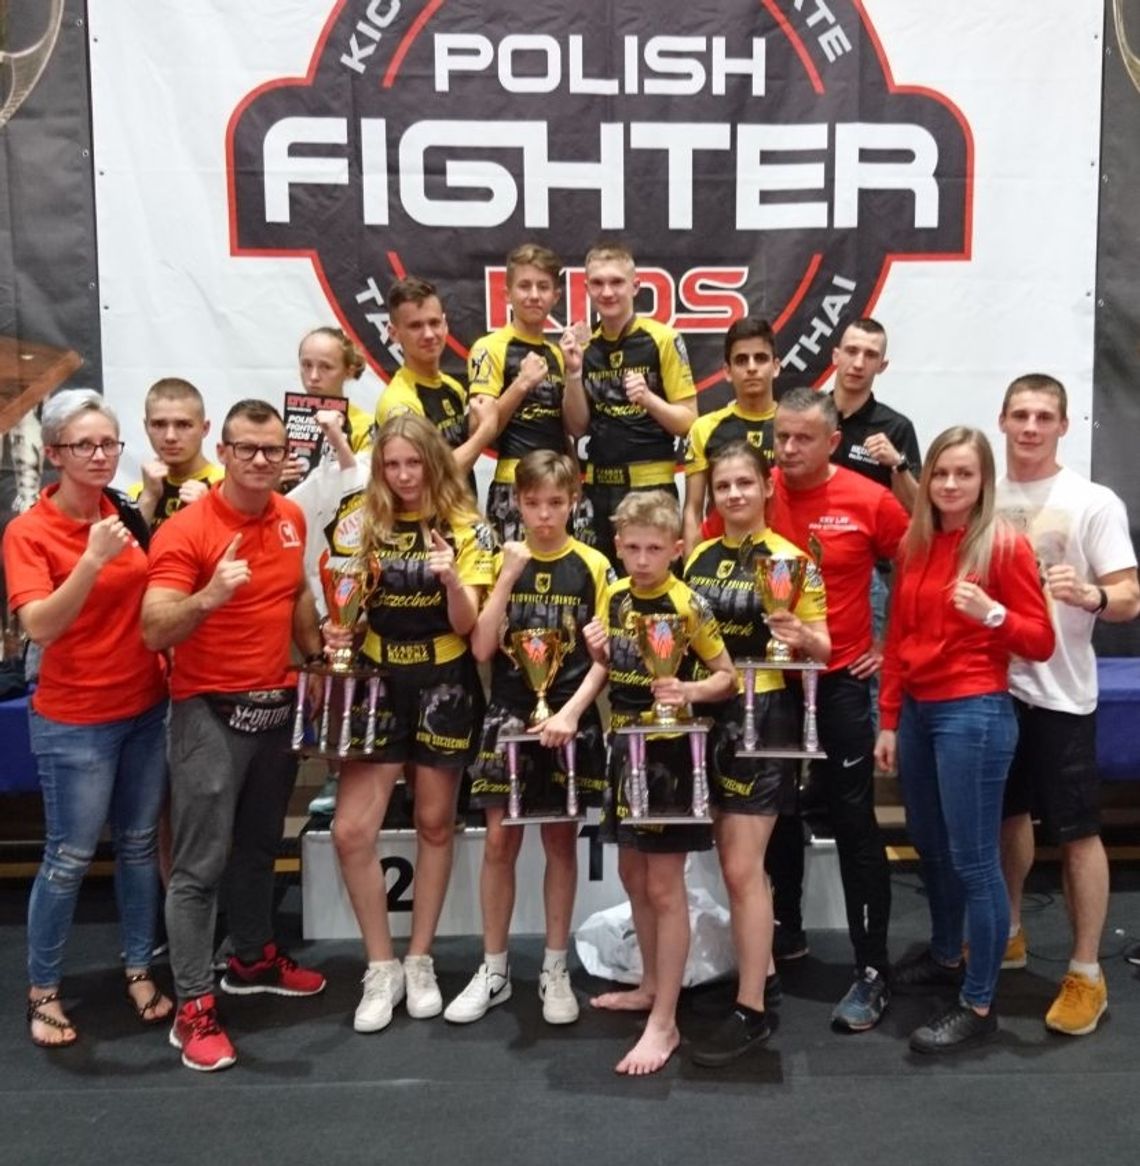 Polish Fighter Kids